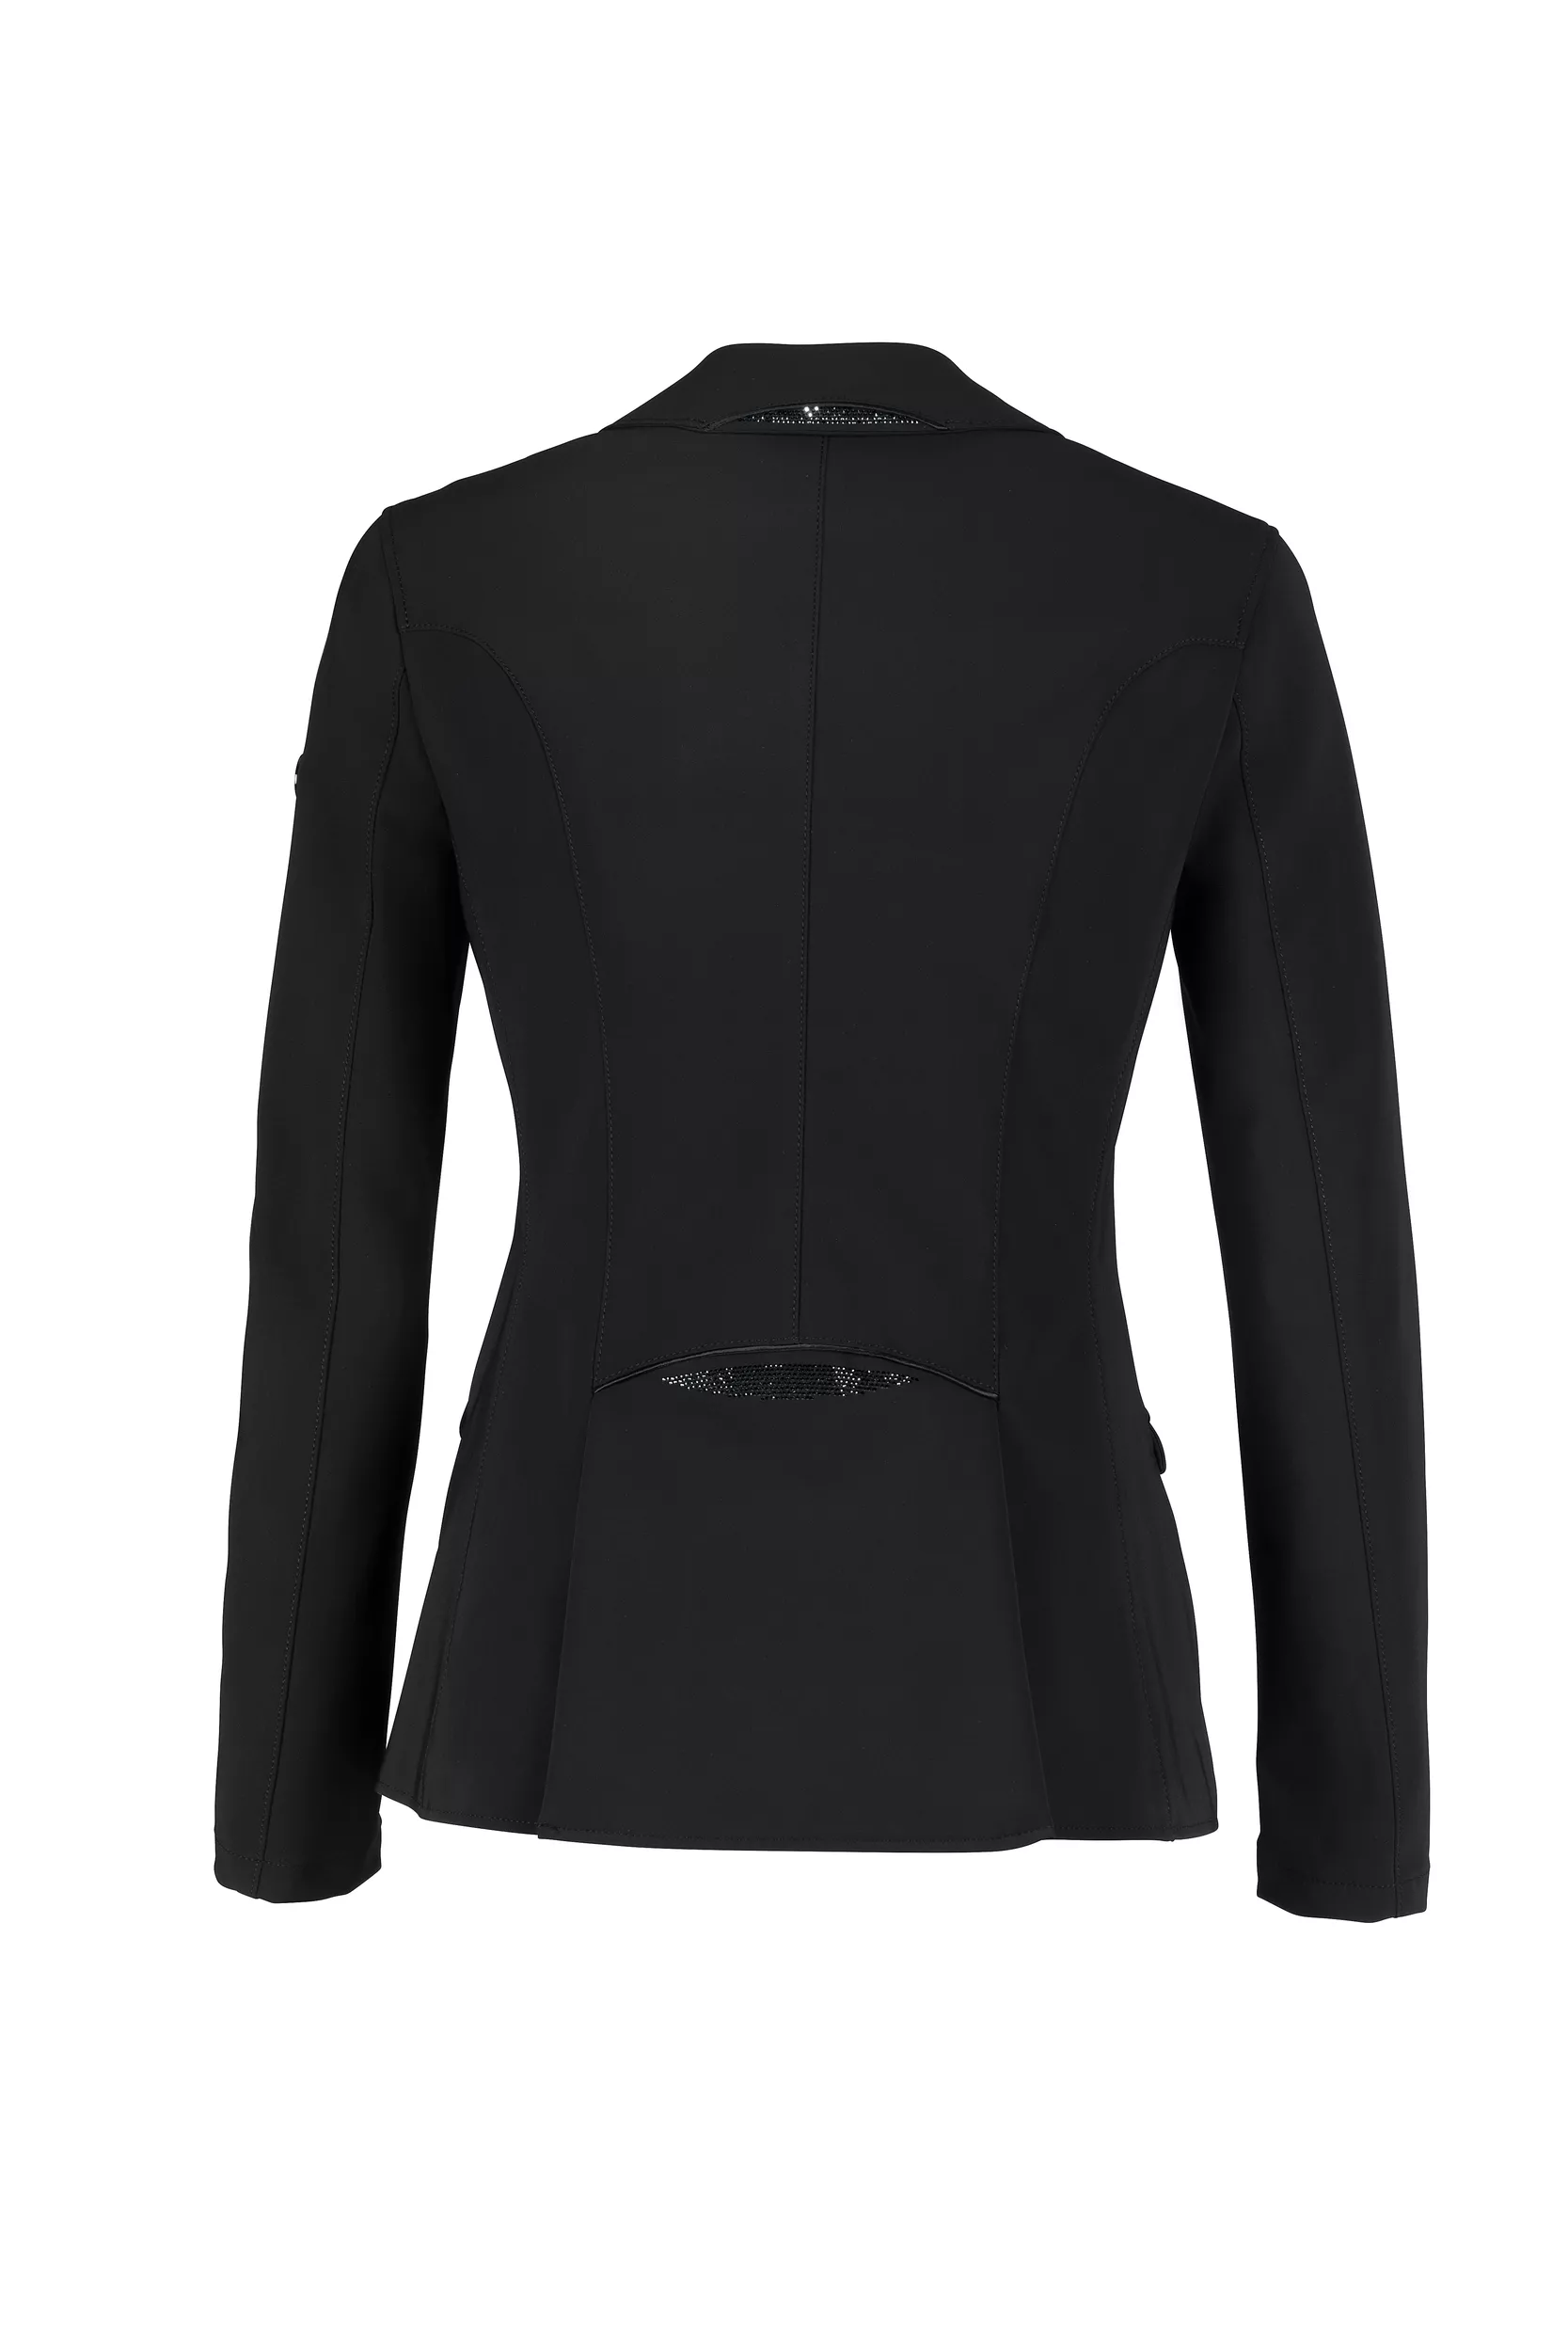 ISALIE Ladies Tournament Jacket (jacket), SPORTSWEAR 22, black